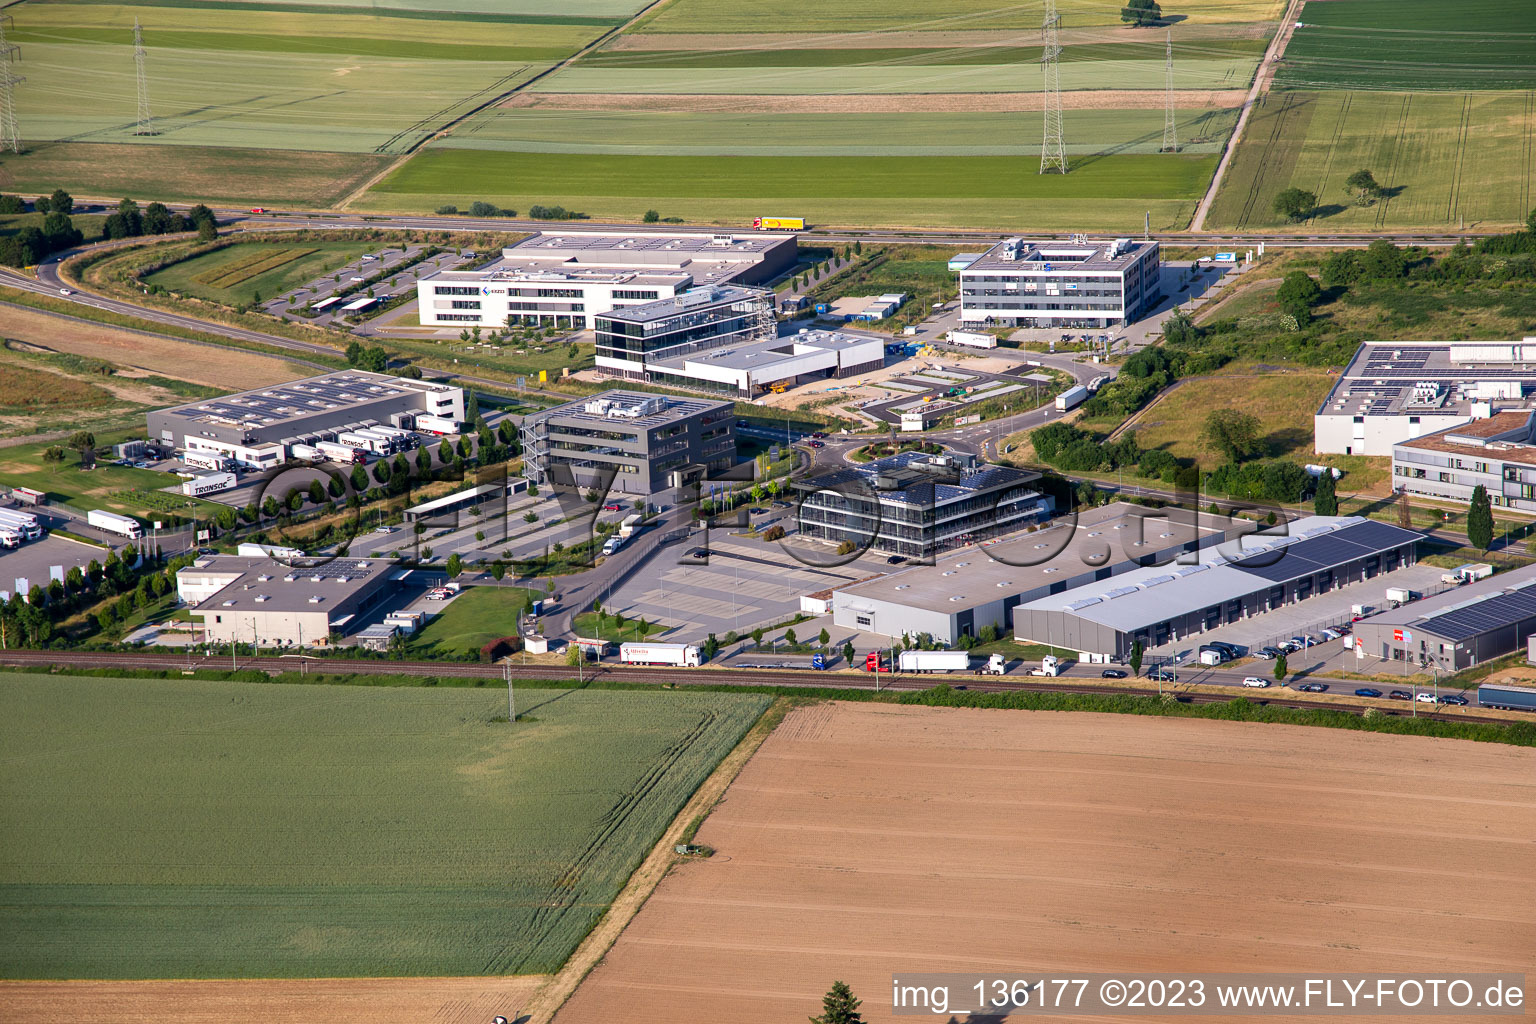 Kardex Software GmbH in Rülzheim in the state Rhineland-Palatinate, Germany